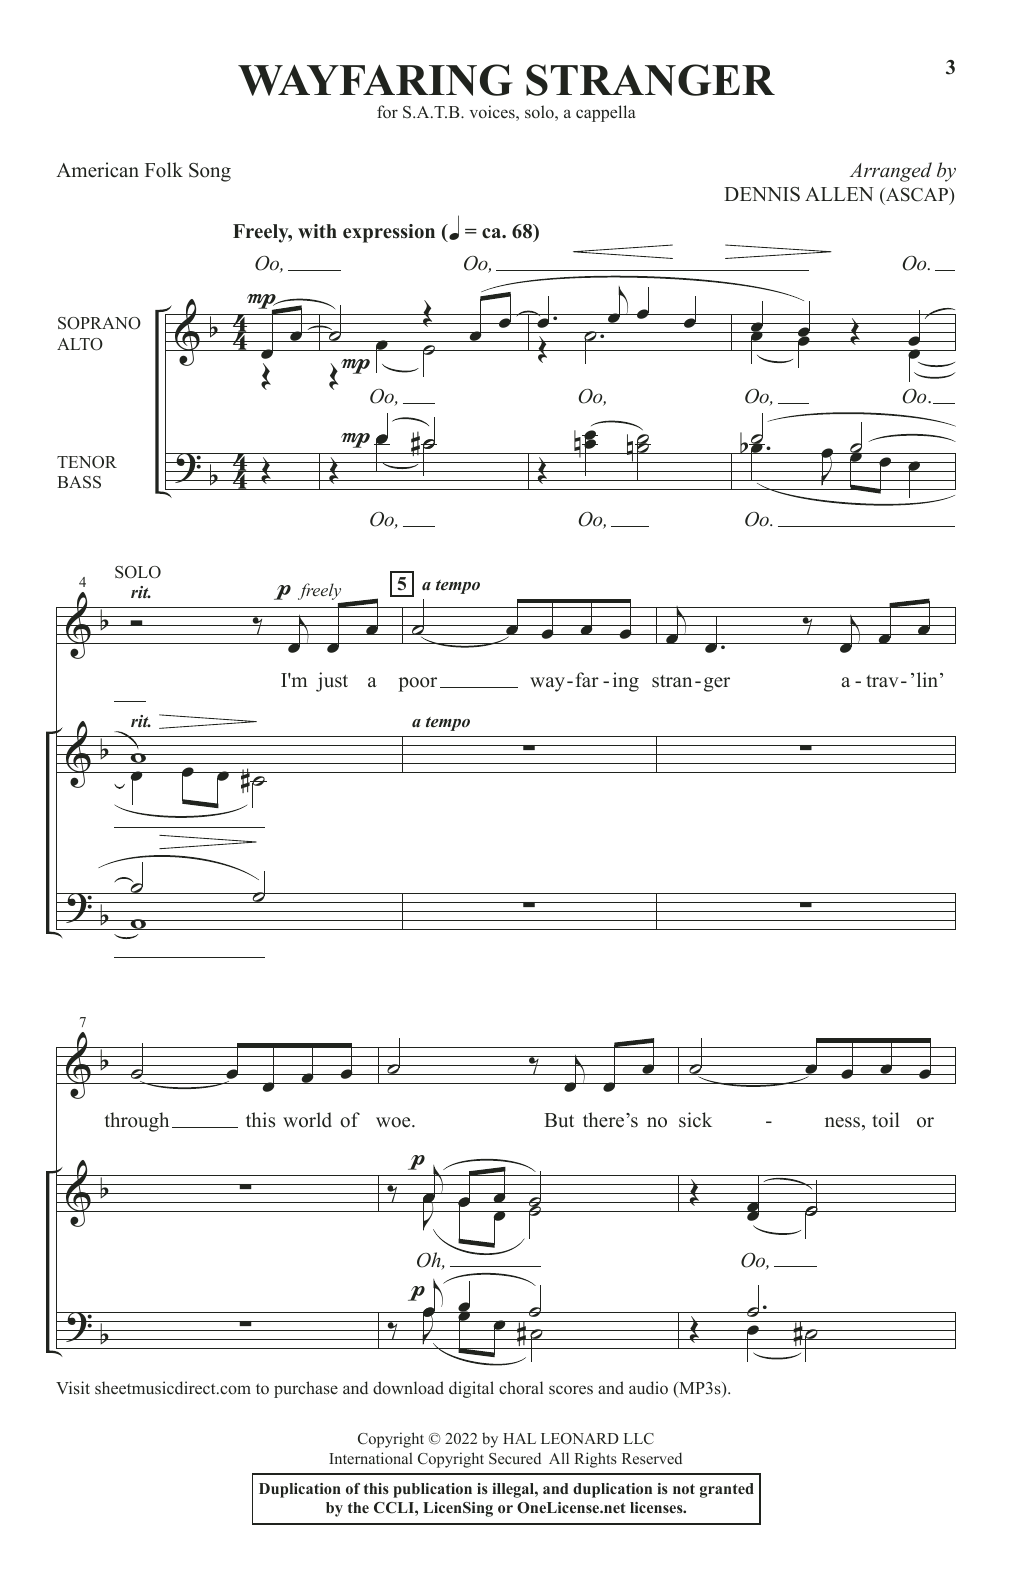 American Folk Song Wayfaring Stranger (arr. Dennis Allen) sheet music notes and chords. Download Printable PDF.